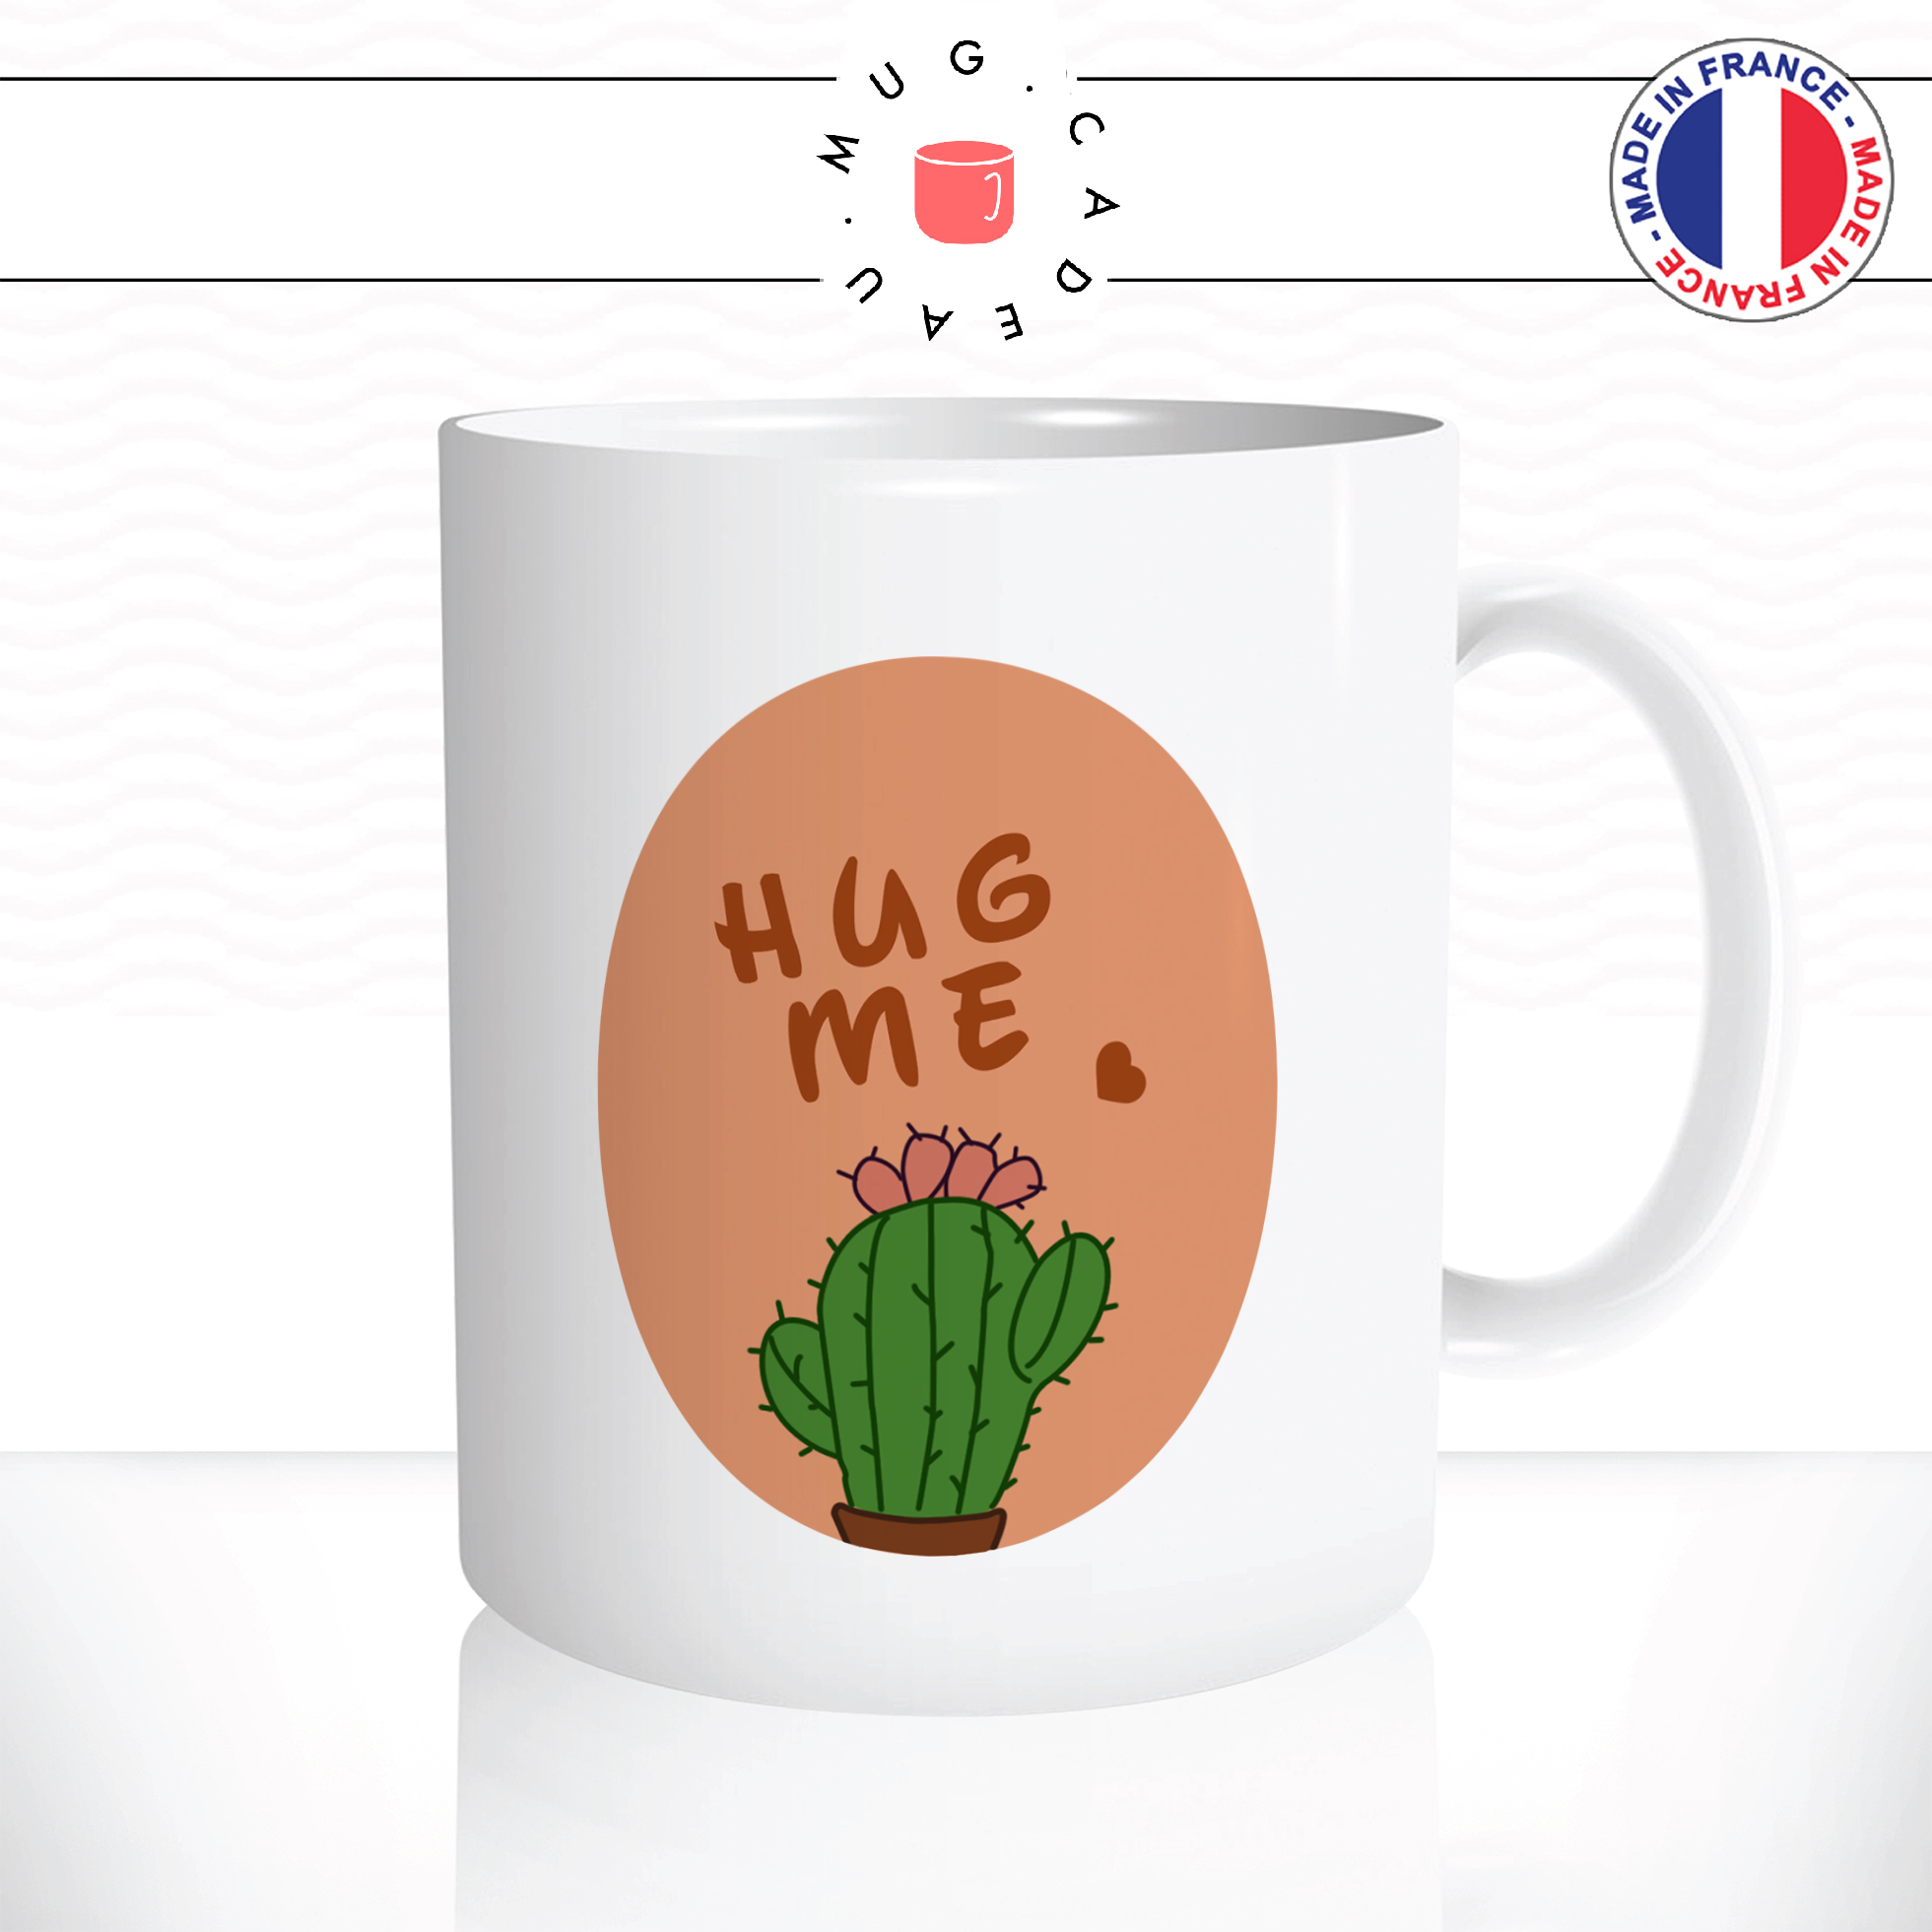 mug-tasse-ref27-fleur-cactus-vert-fond-orange-hug-me-coeur-cafe-the-mugs-tasses-personnalise-anse-droite